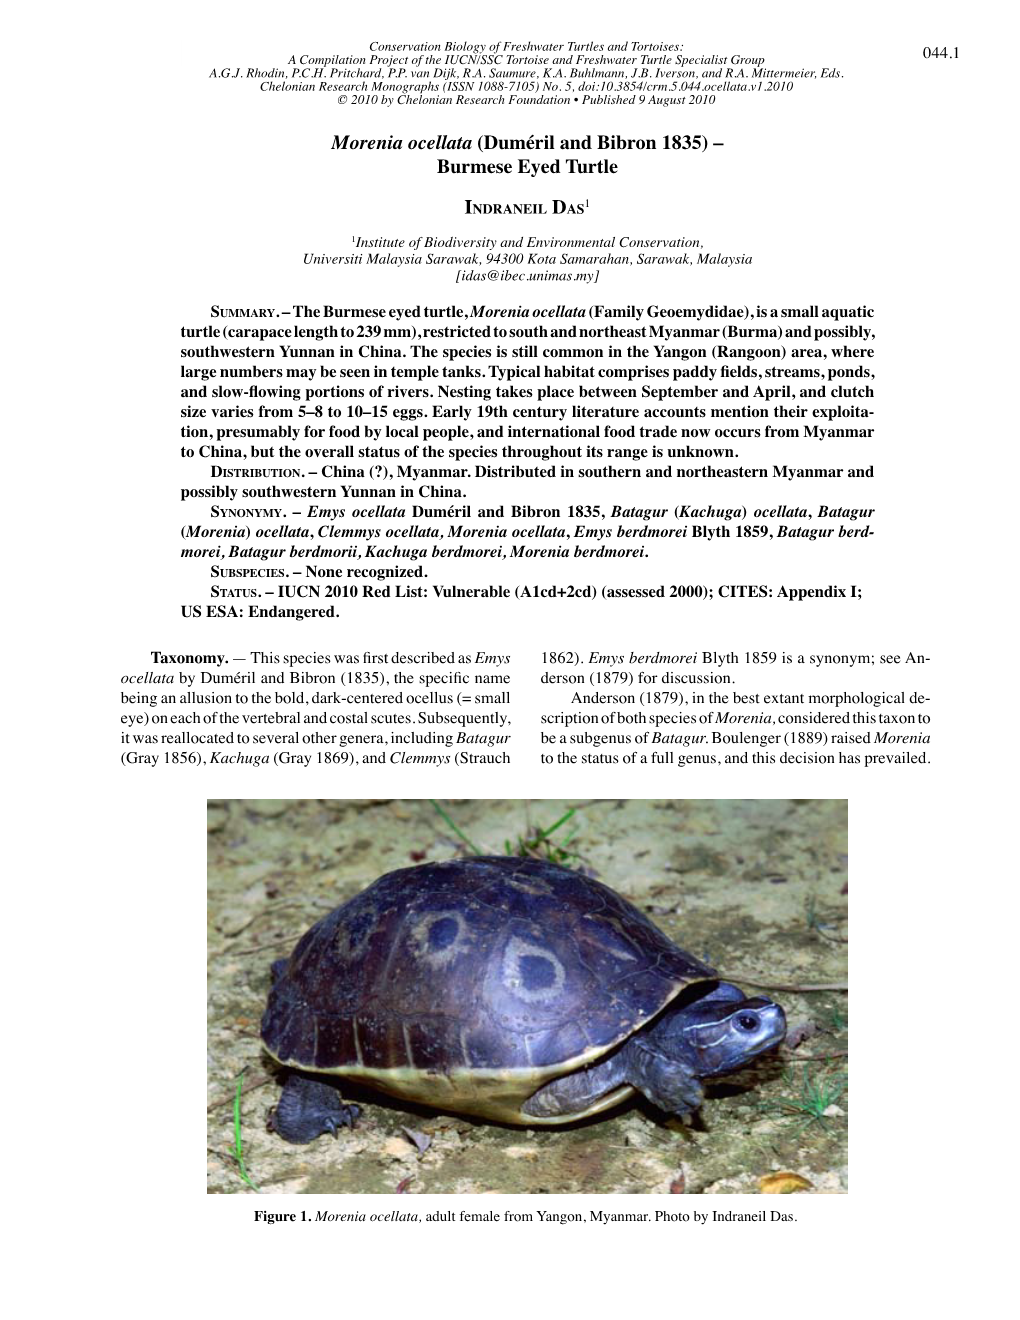 Morenia Ocellata (Duméril and Bibron 1835) – Burmese Eyed Turtle